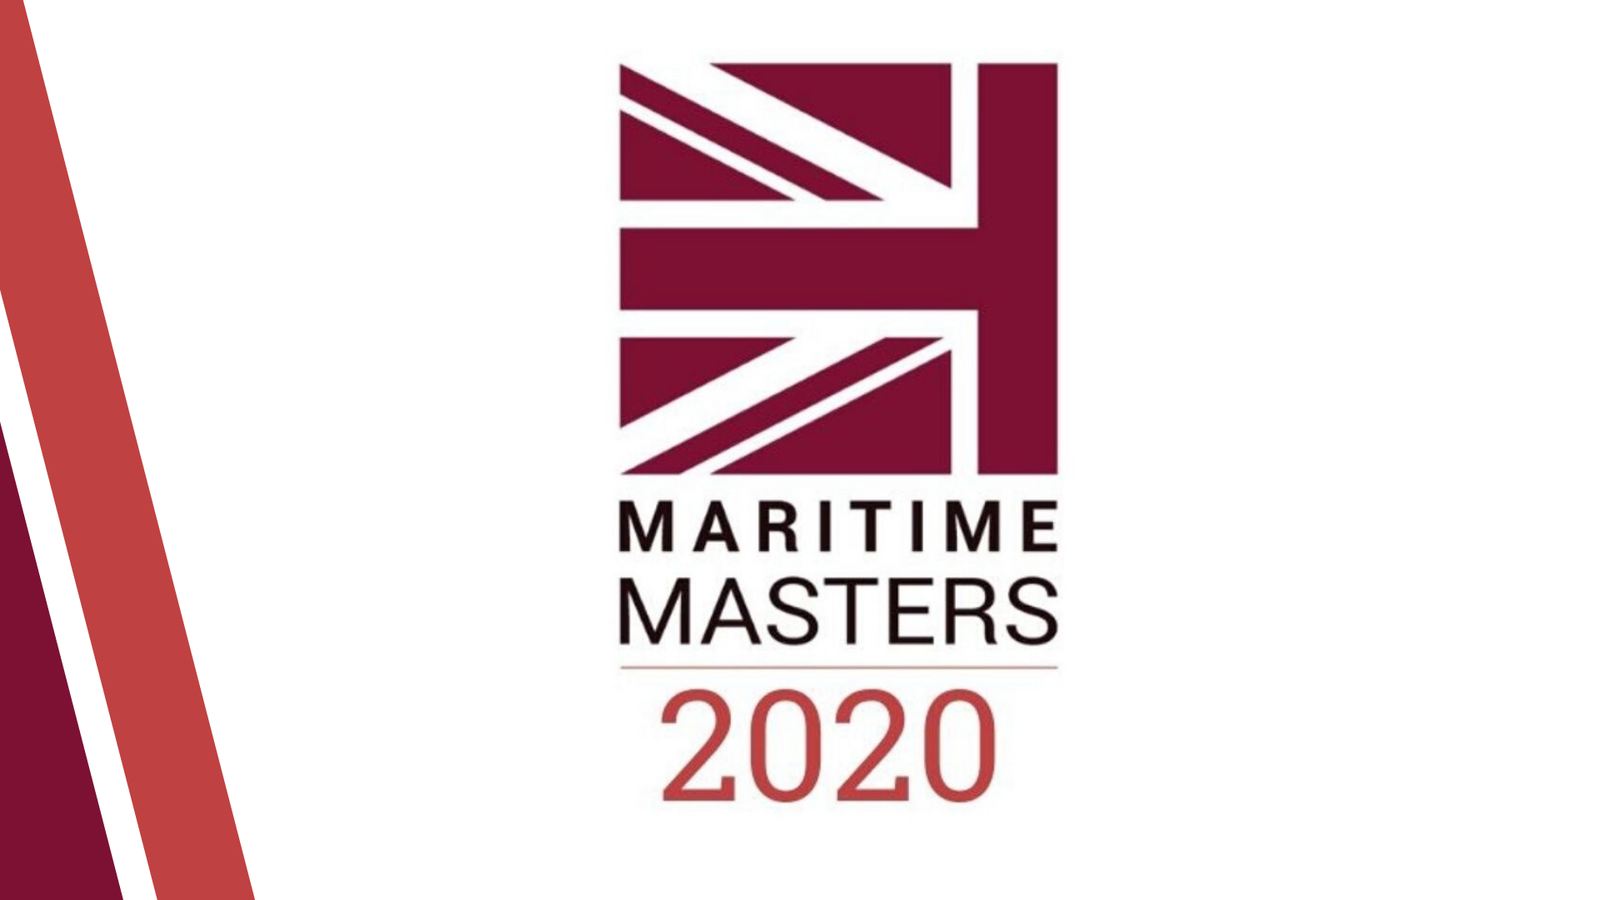 Maritime Masters 2020 